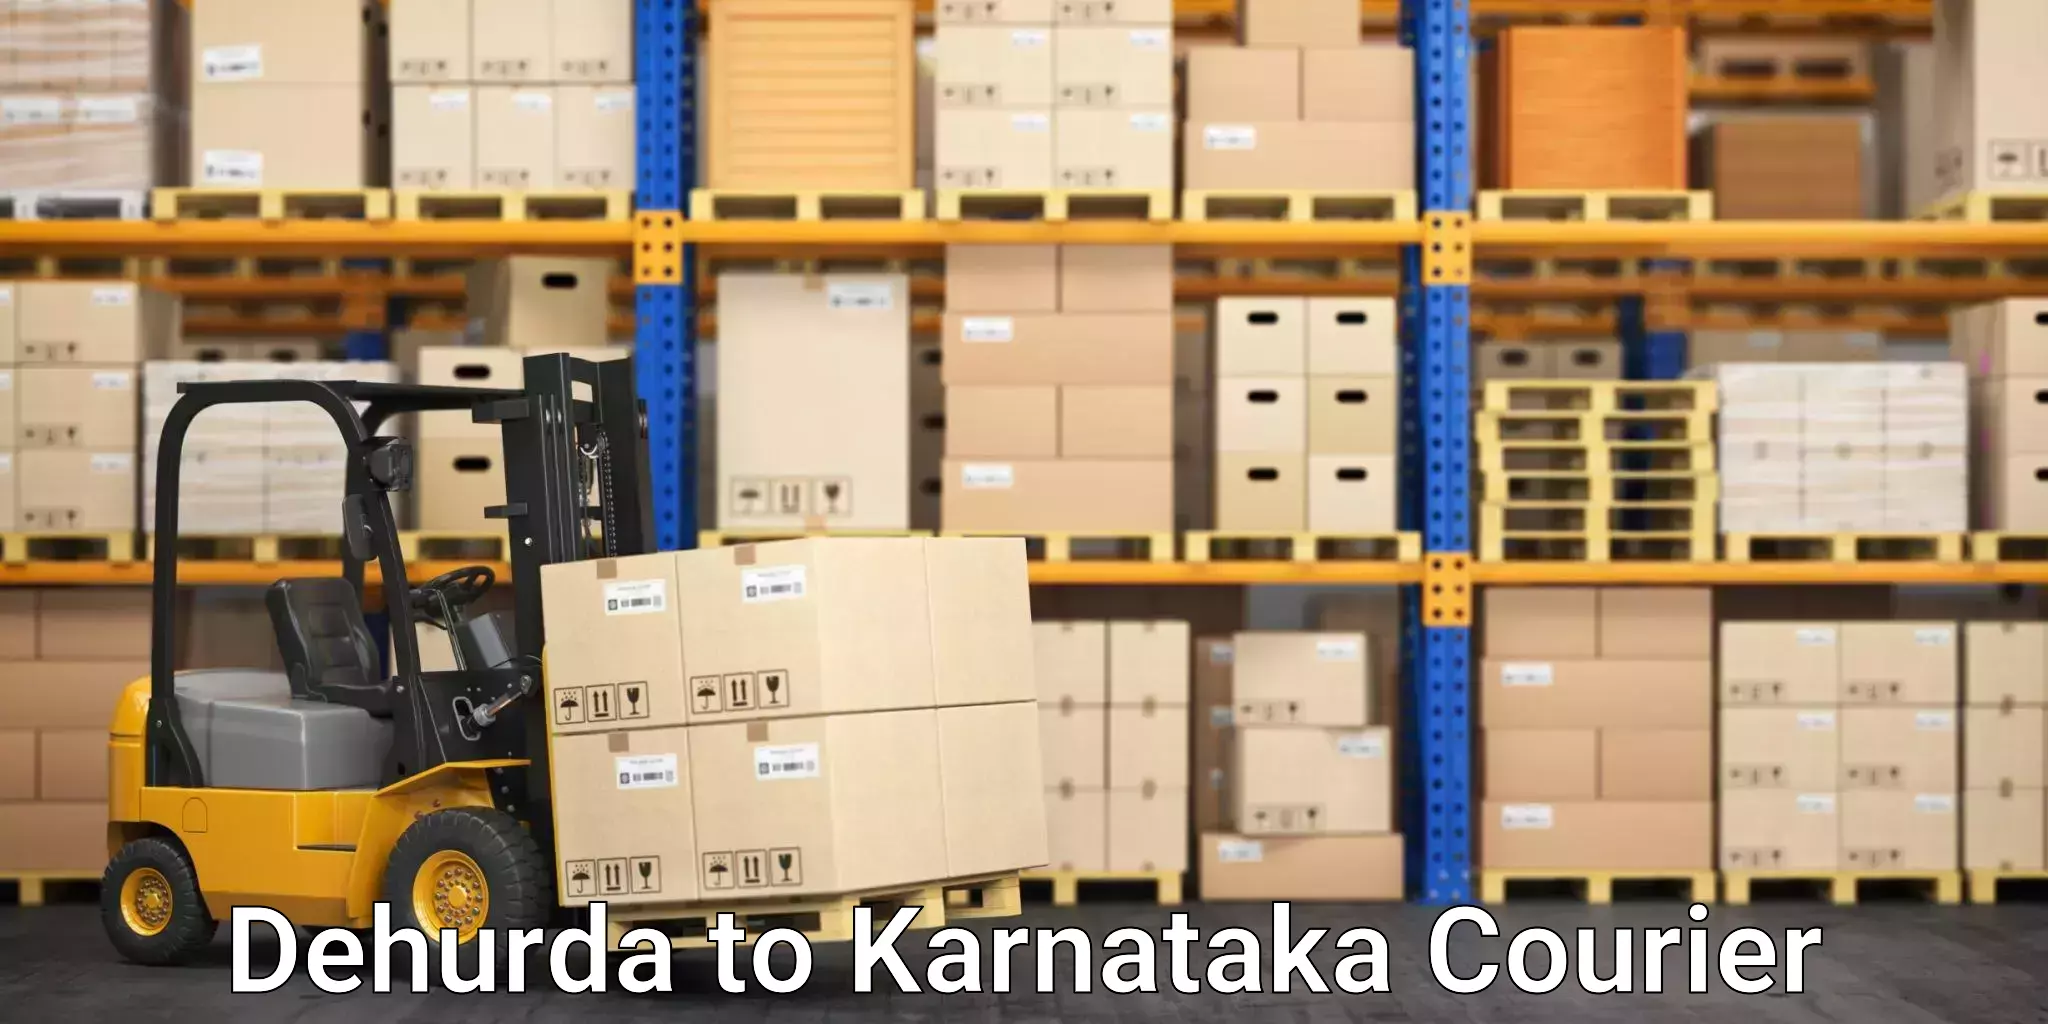 Smart logistics solutions Dehurda to Karnataka